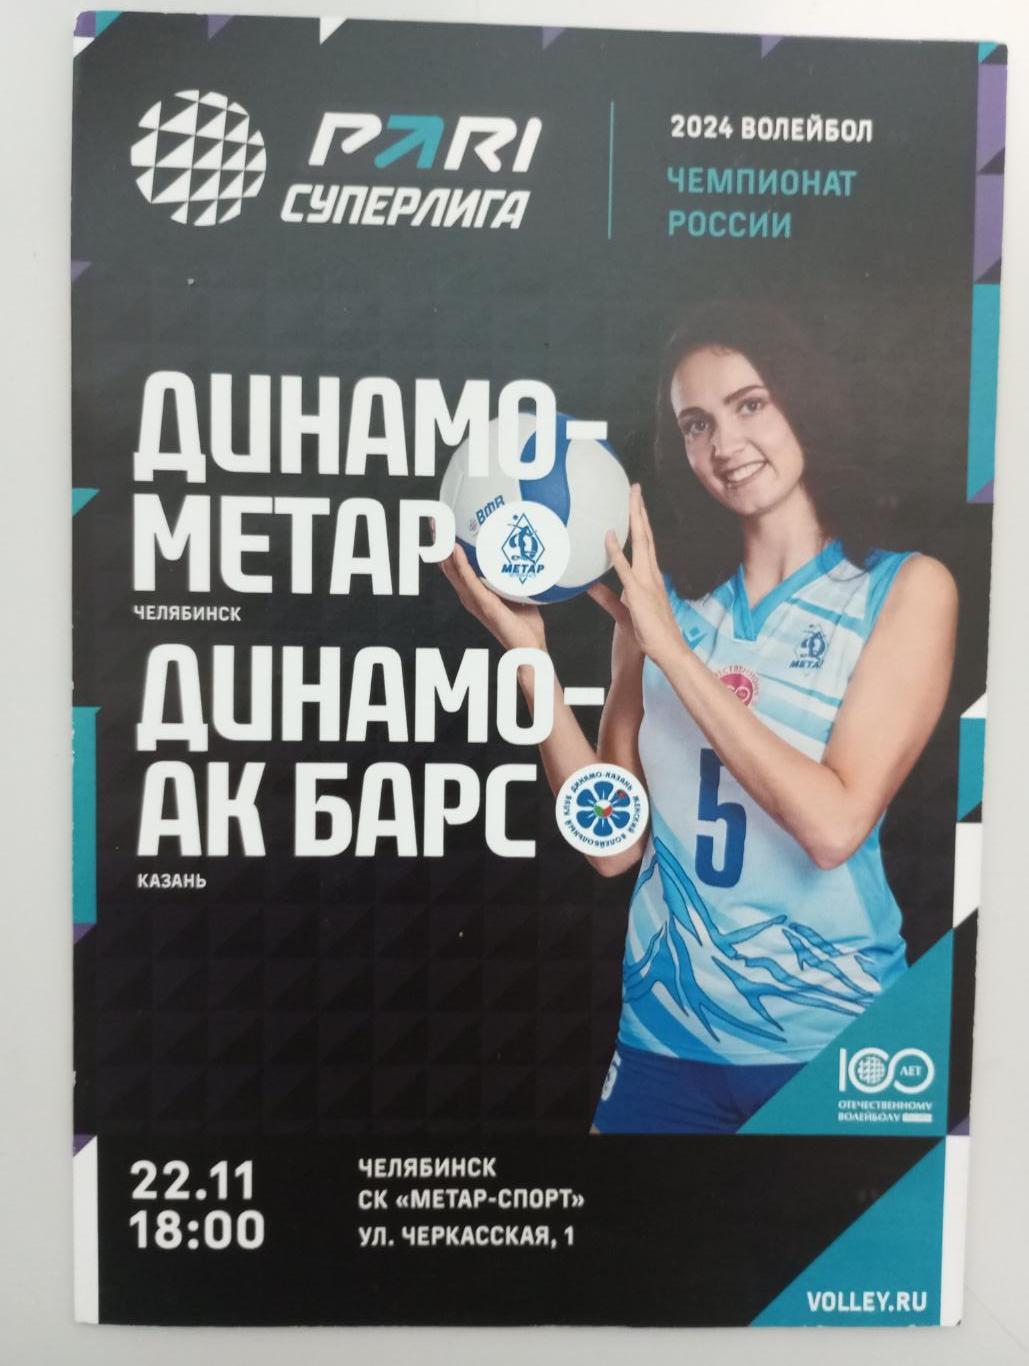 Динамо - Метар Челябинск - Динамо - АК Барс Казань 2023/2024 год